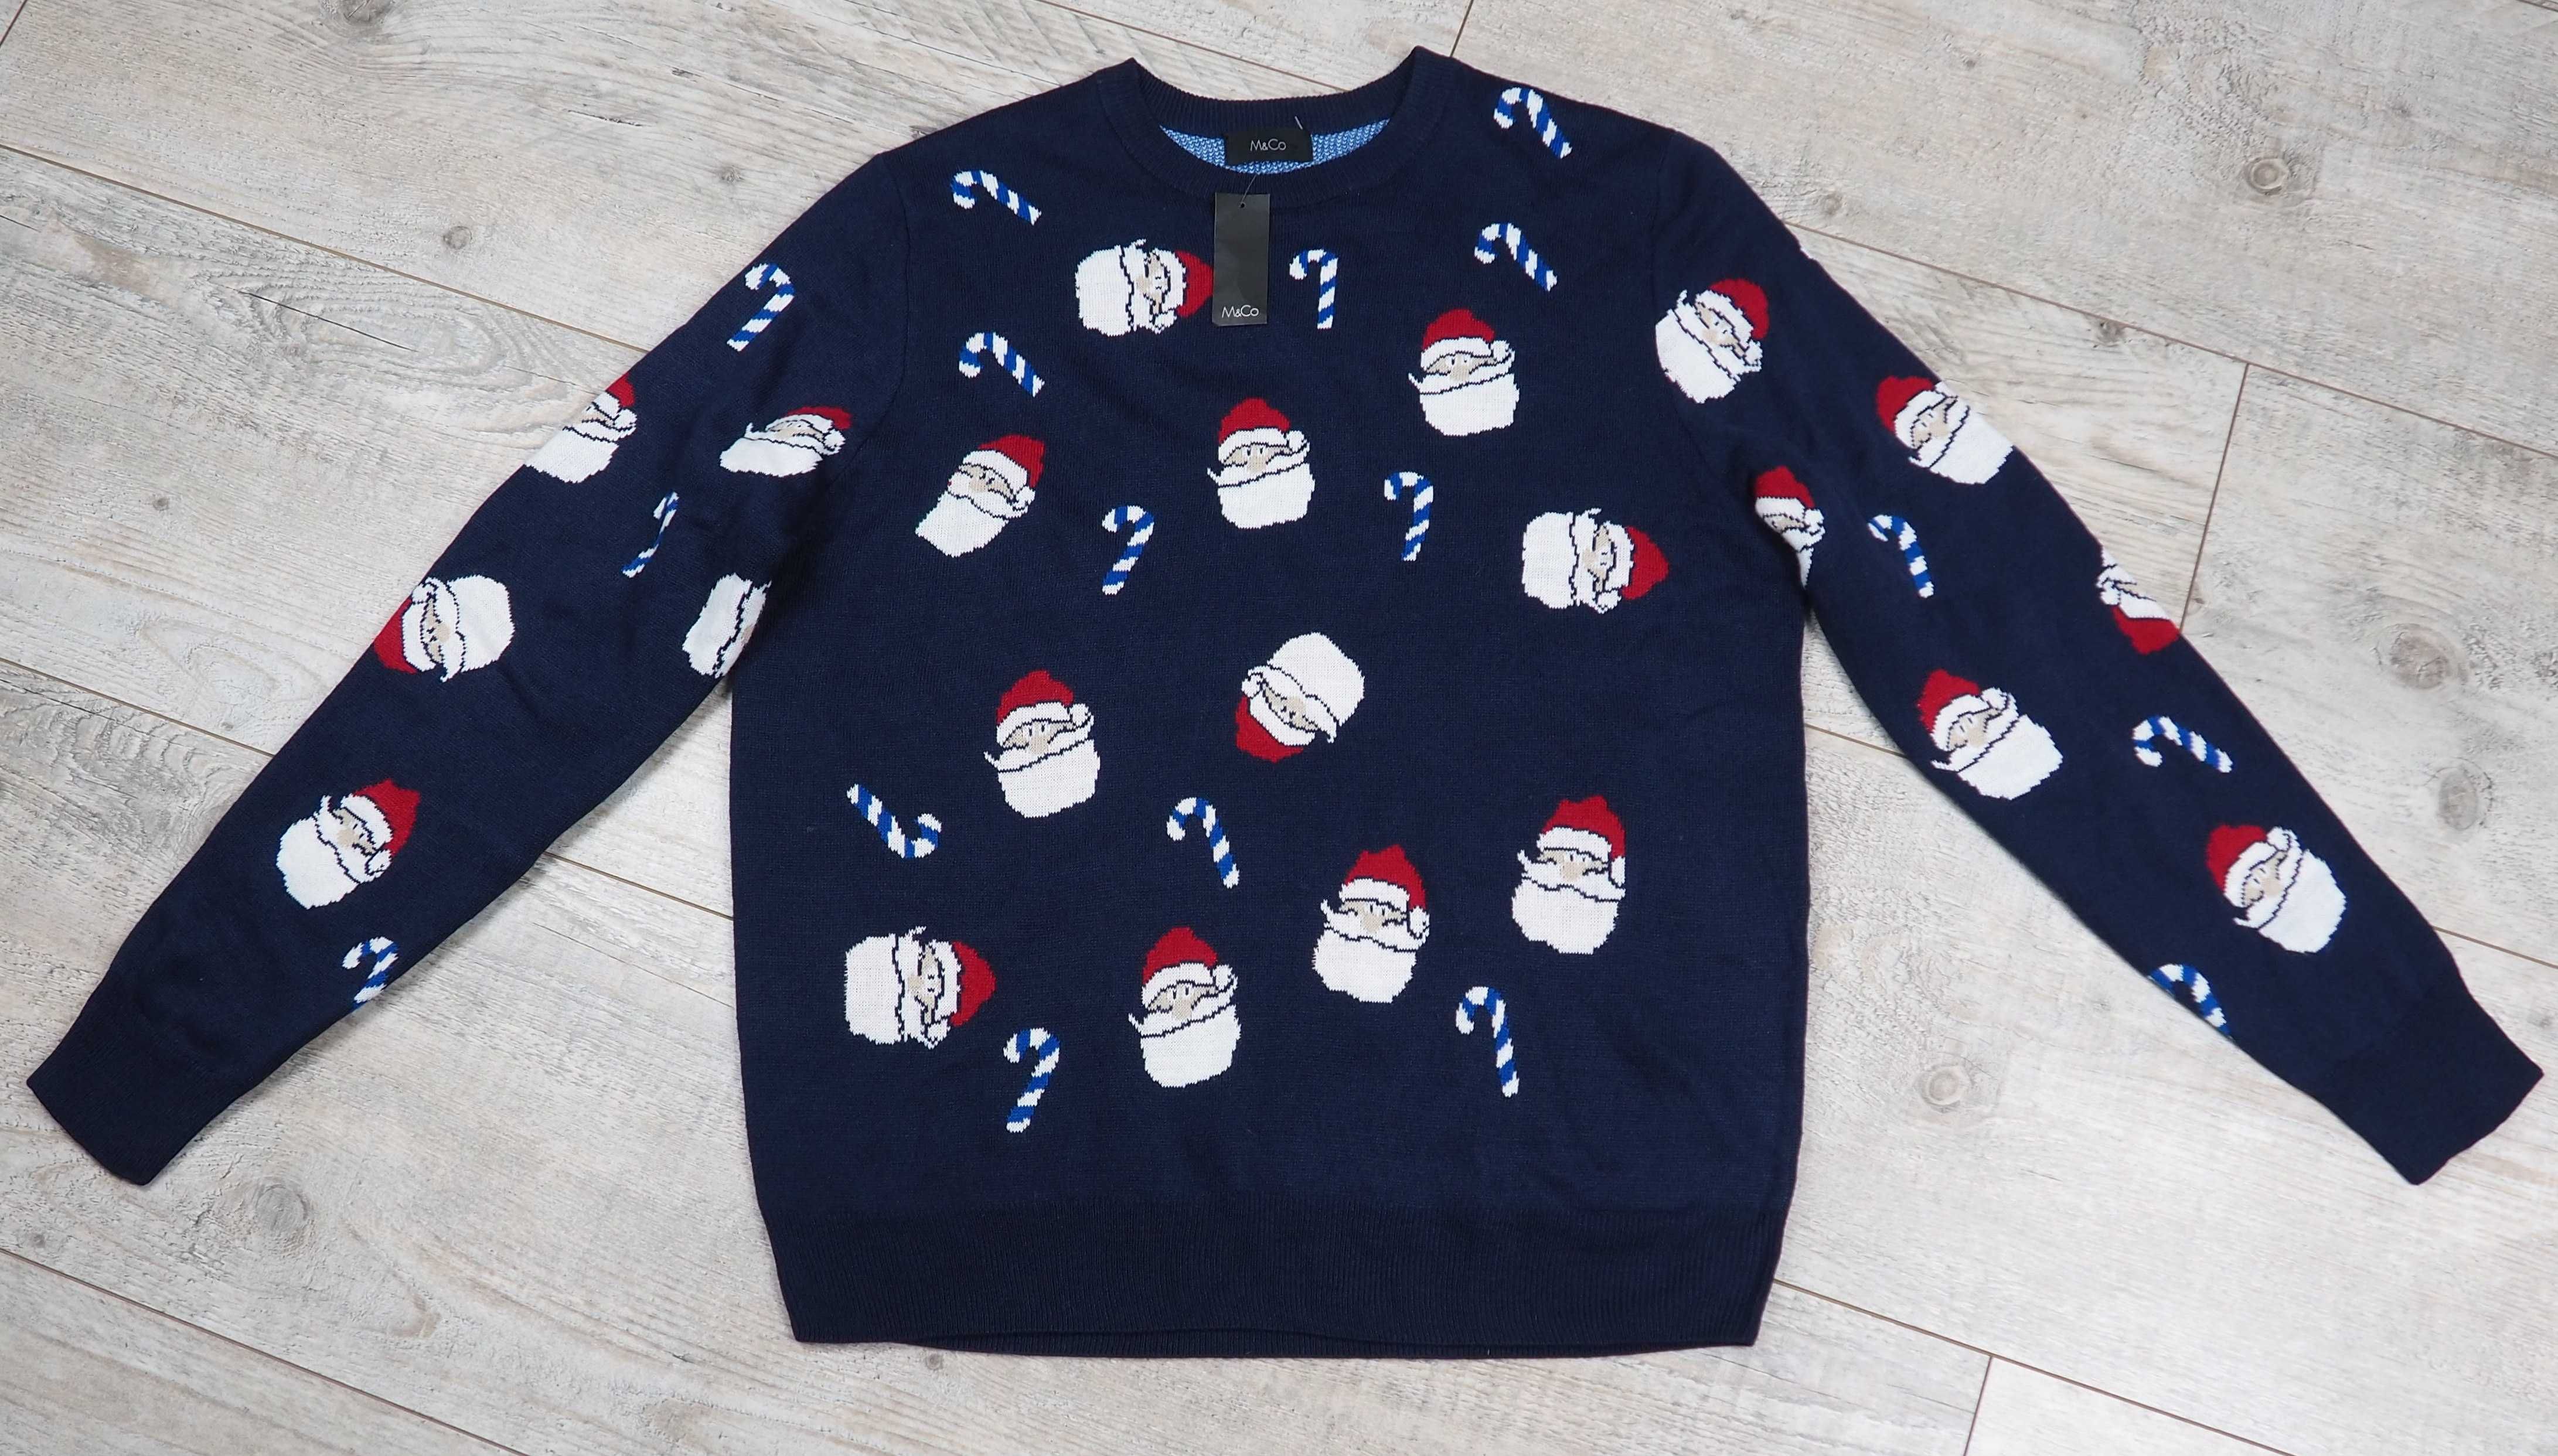 M&Co._Xmas jumper_Santa's_świąteczny sweter męski_L